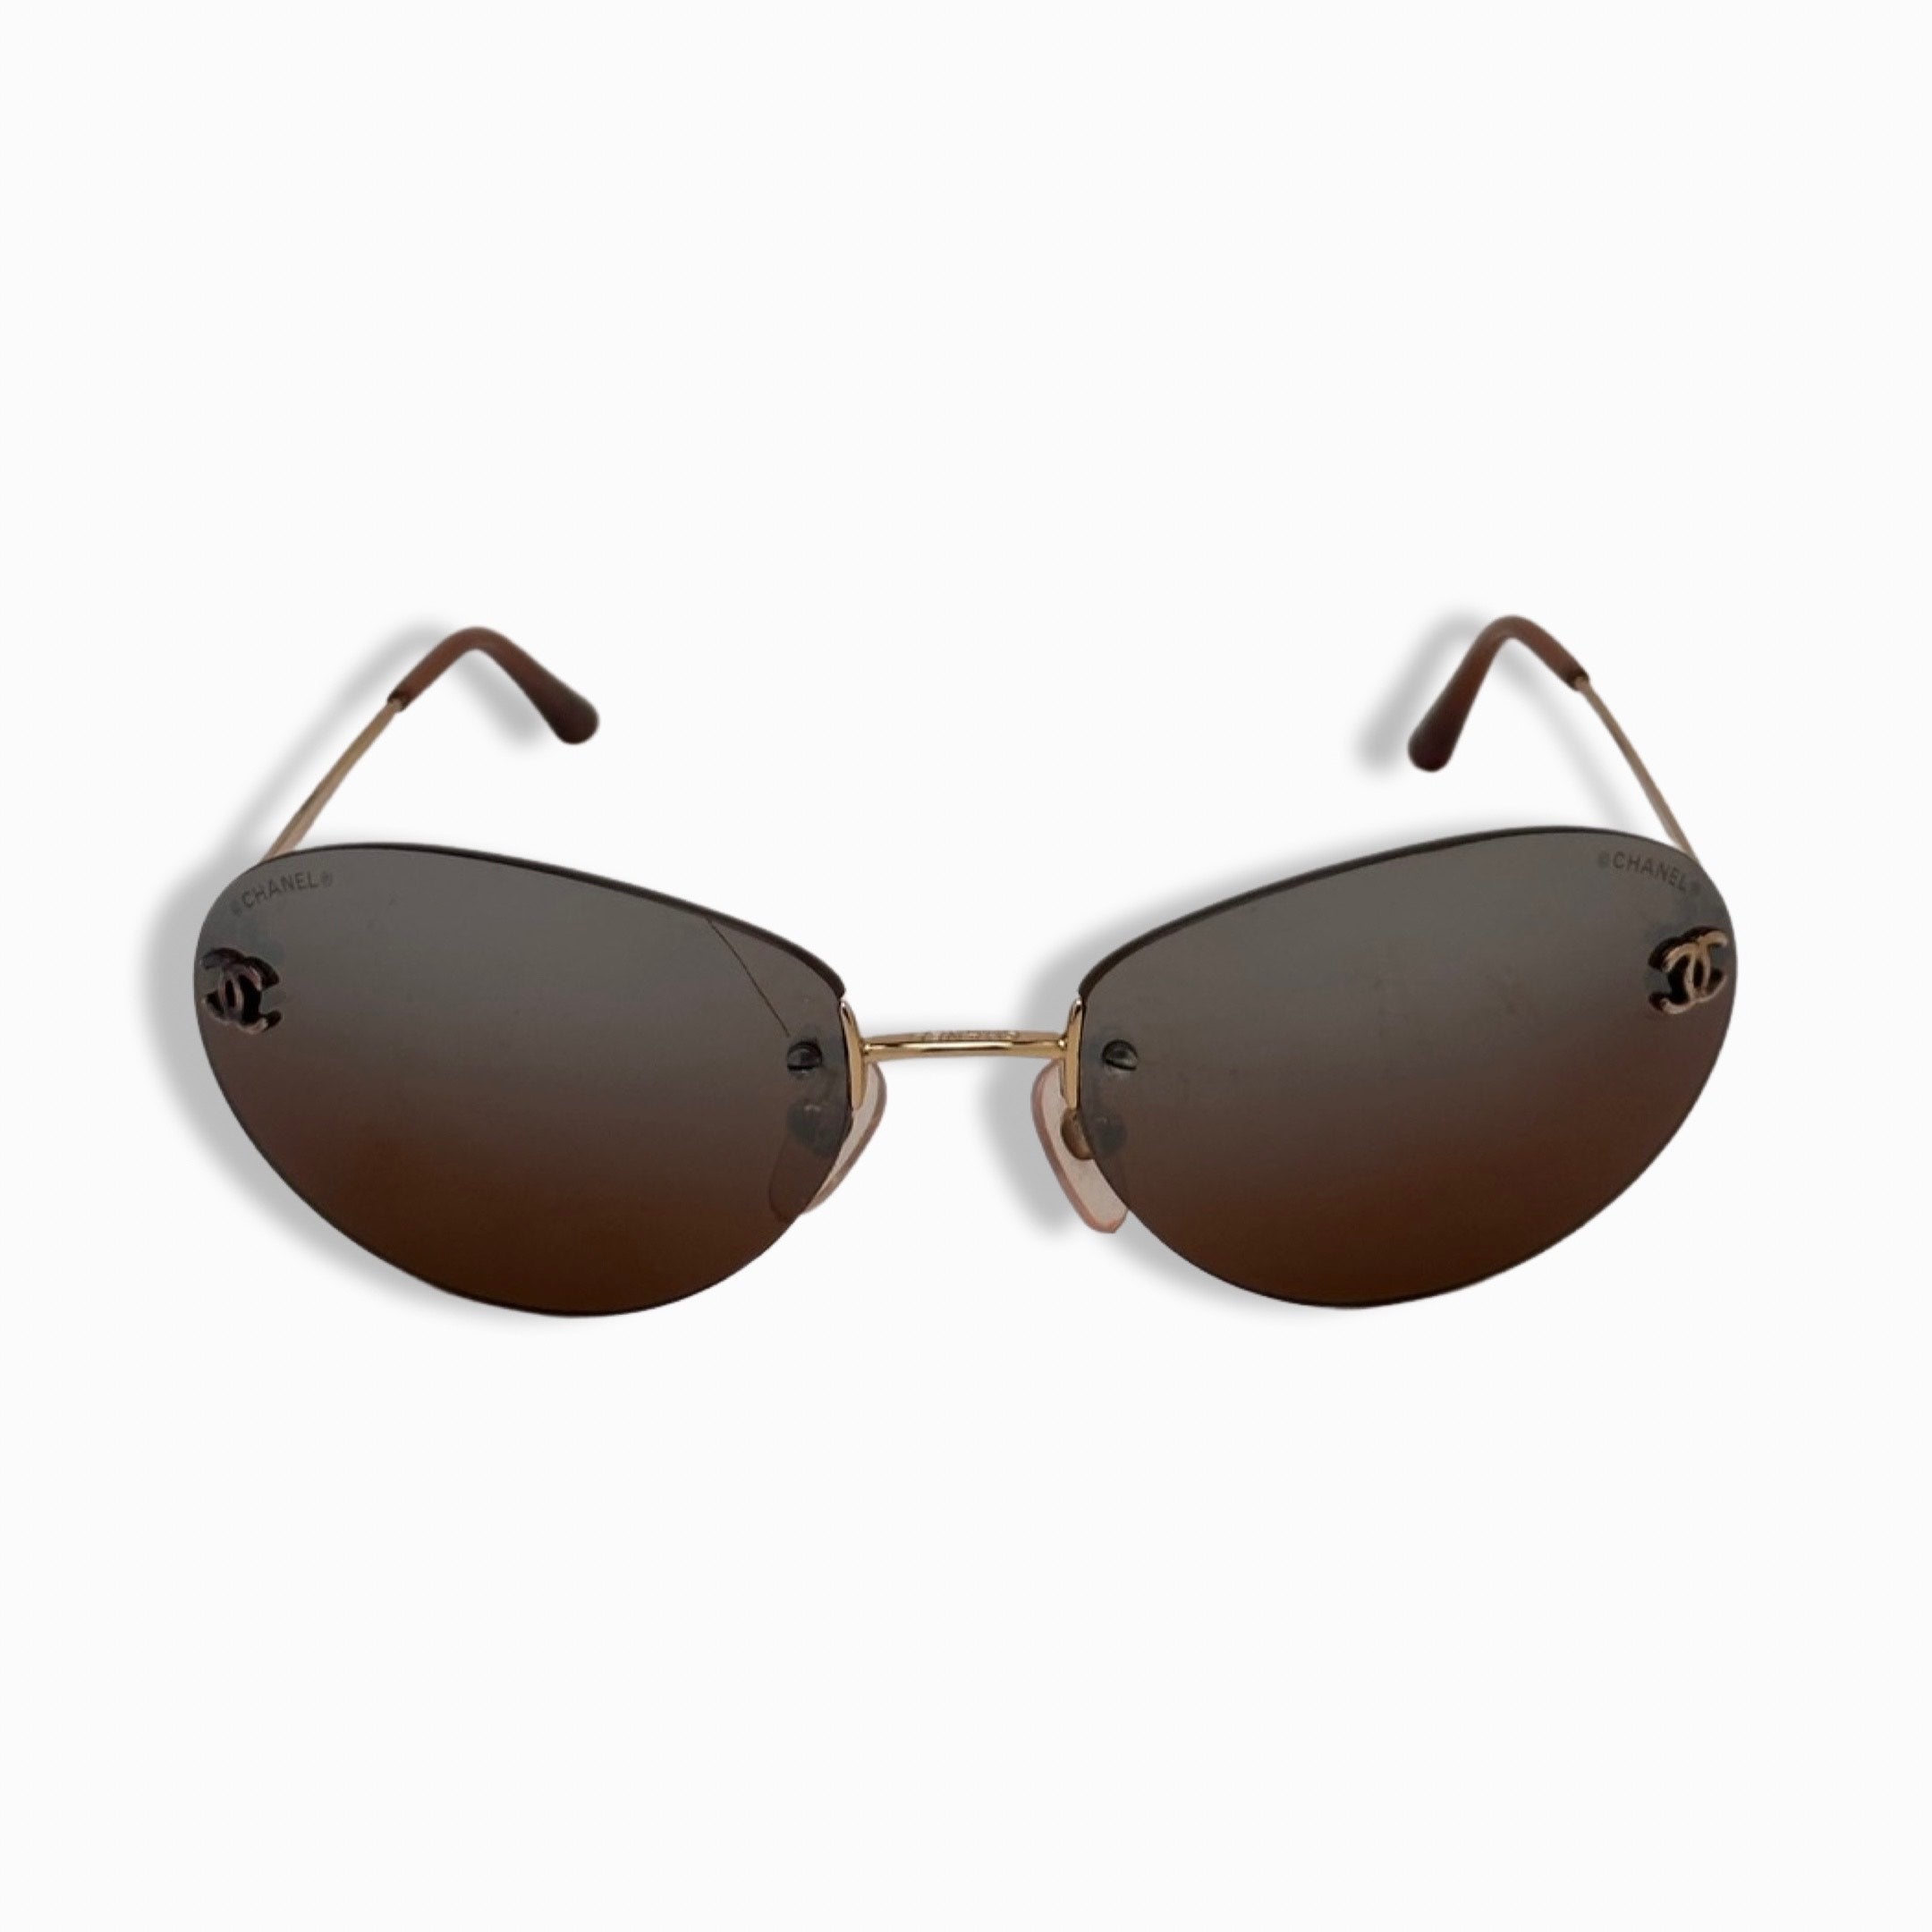 Chanel Gray Cat Eye Sunglasses Ch5415